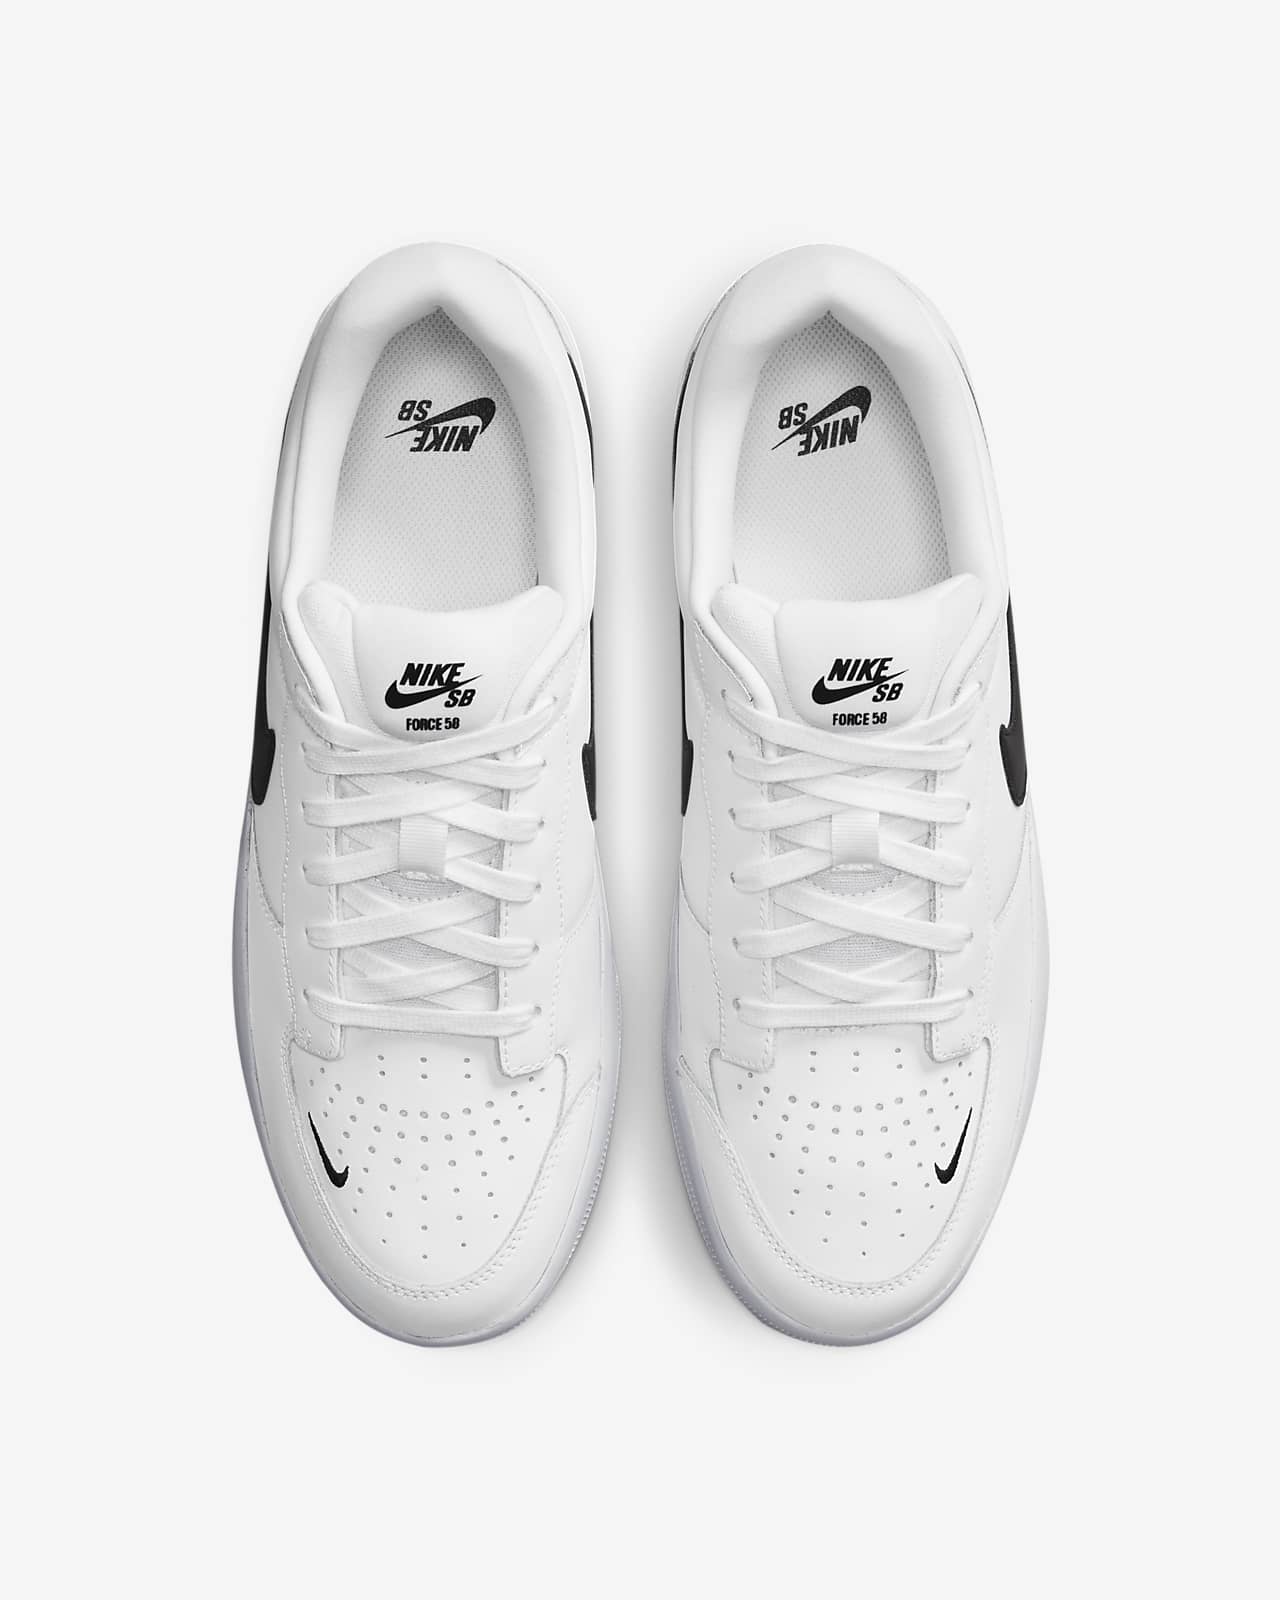 Nike SB Force white nike skateboard shoes 58 Premium Skate Shoes. Nike.com